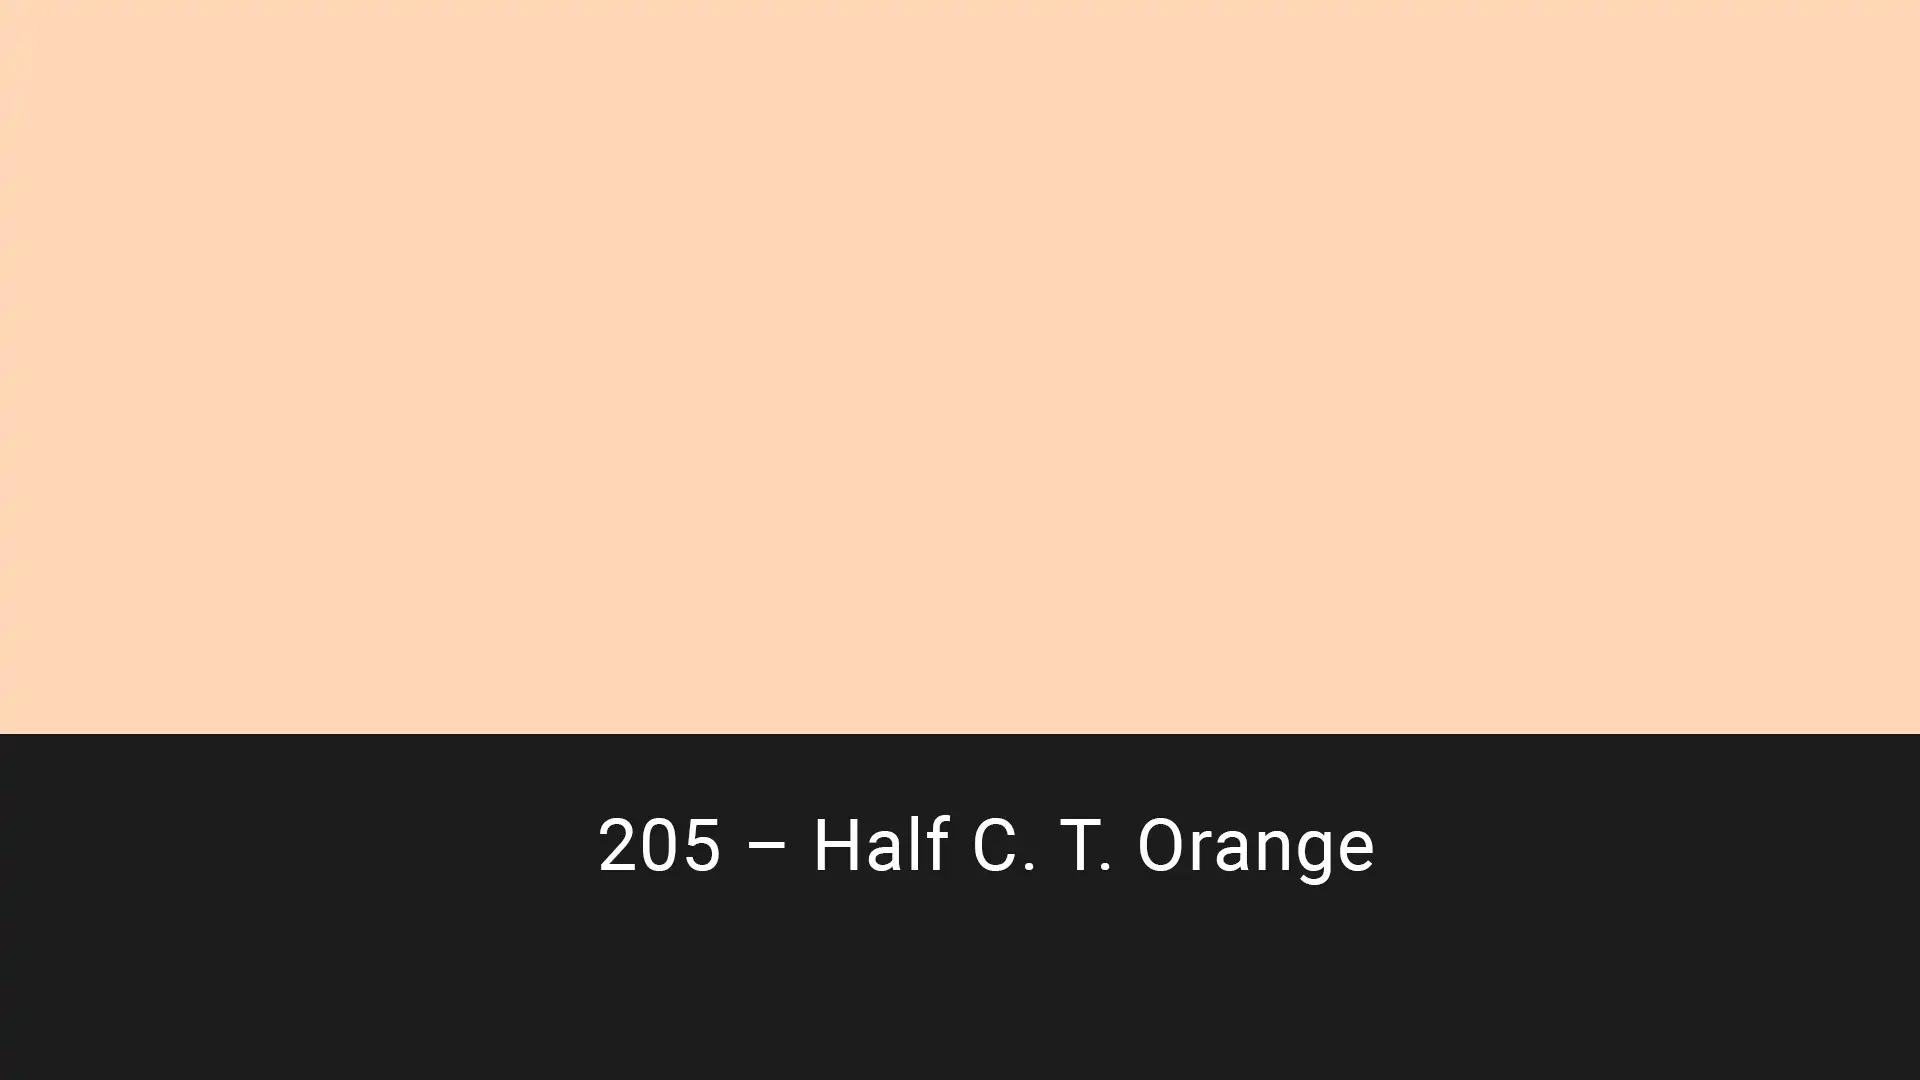 Cotech filters 205 Half C.T. Orange